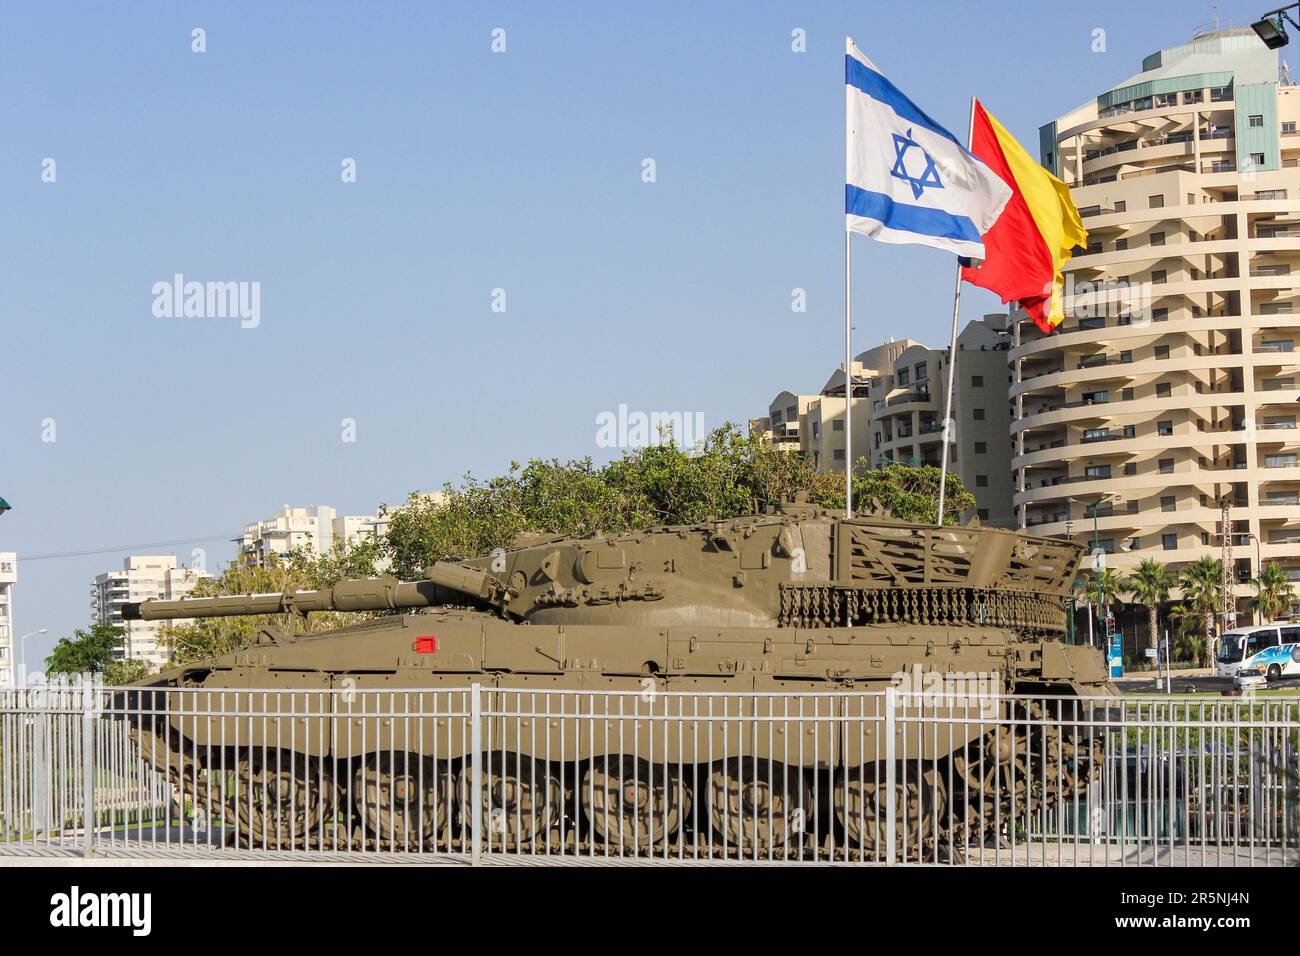 Israeli flags fly above a Merkava tank on display in Netanya, Israel. Stock Photo